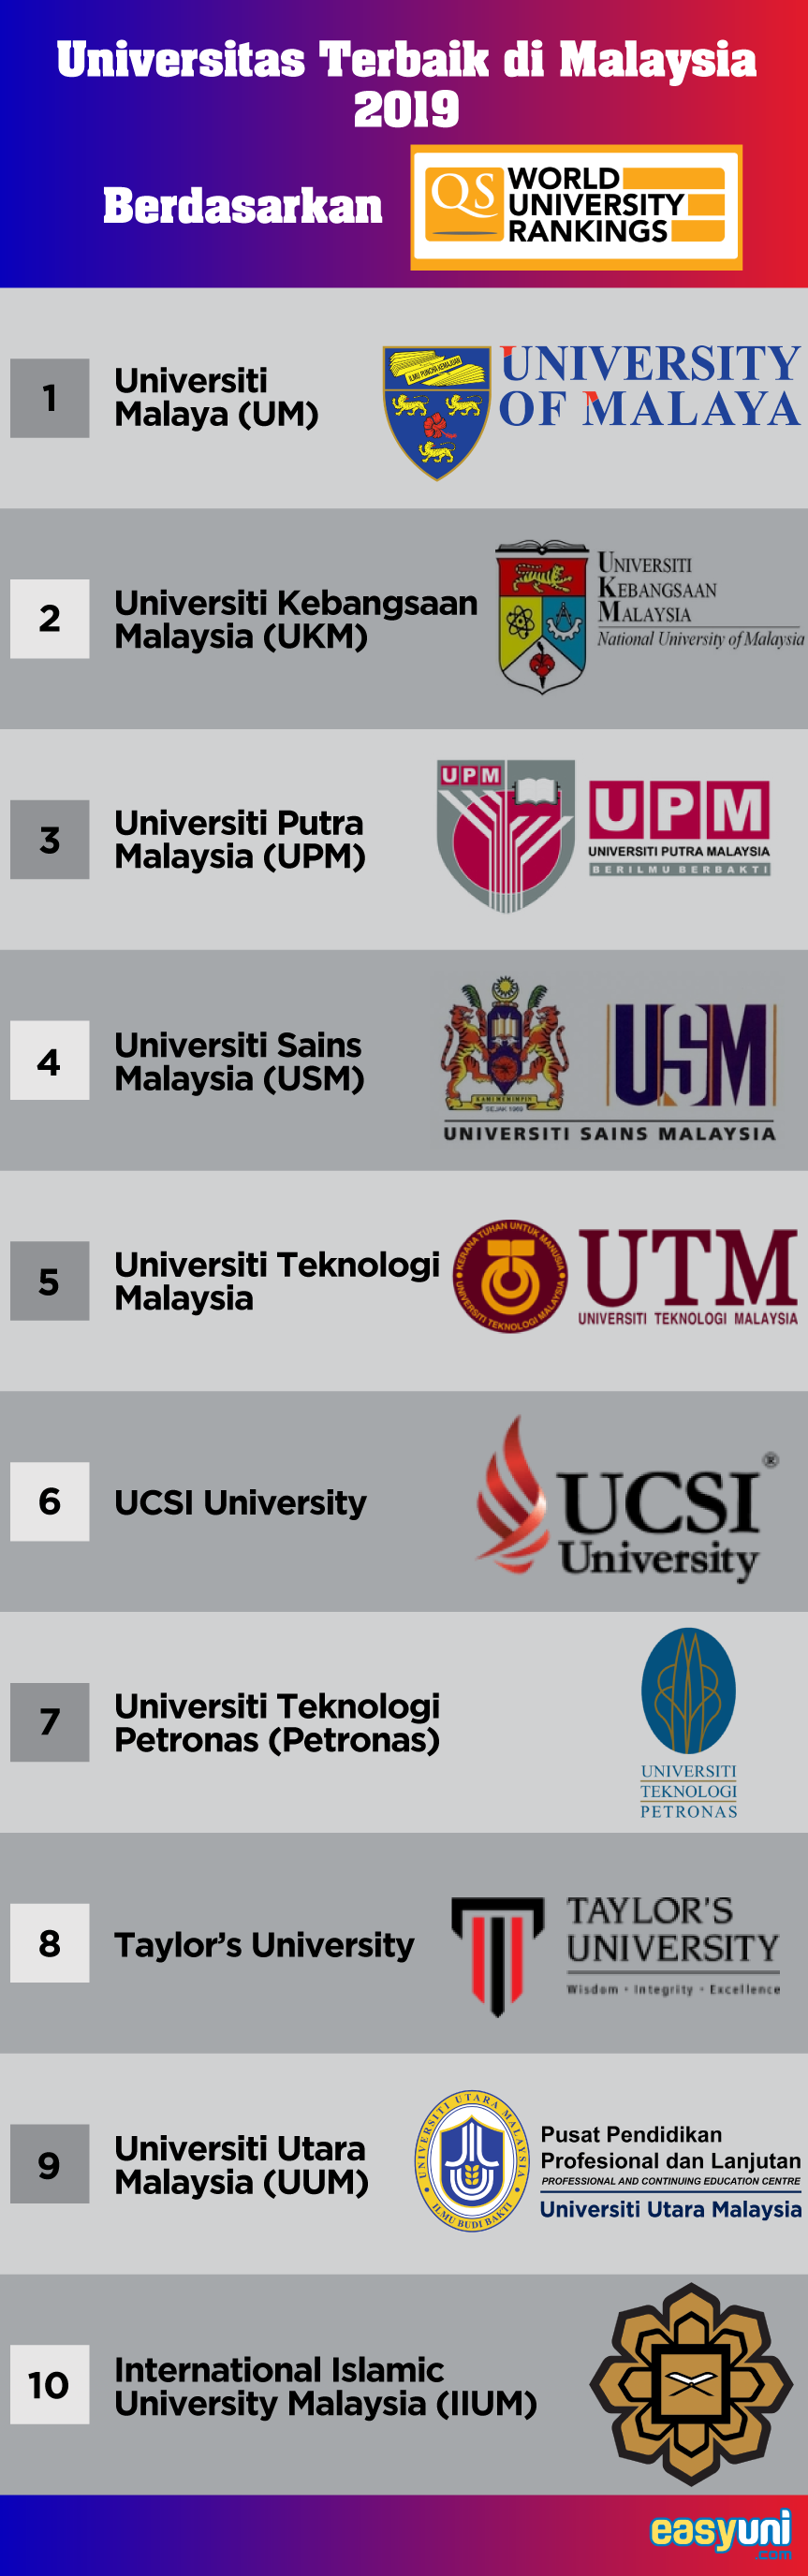 daftar universitas terbaik malaysia 2019